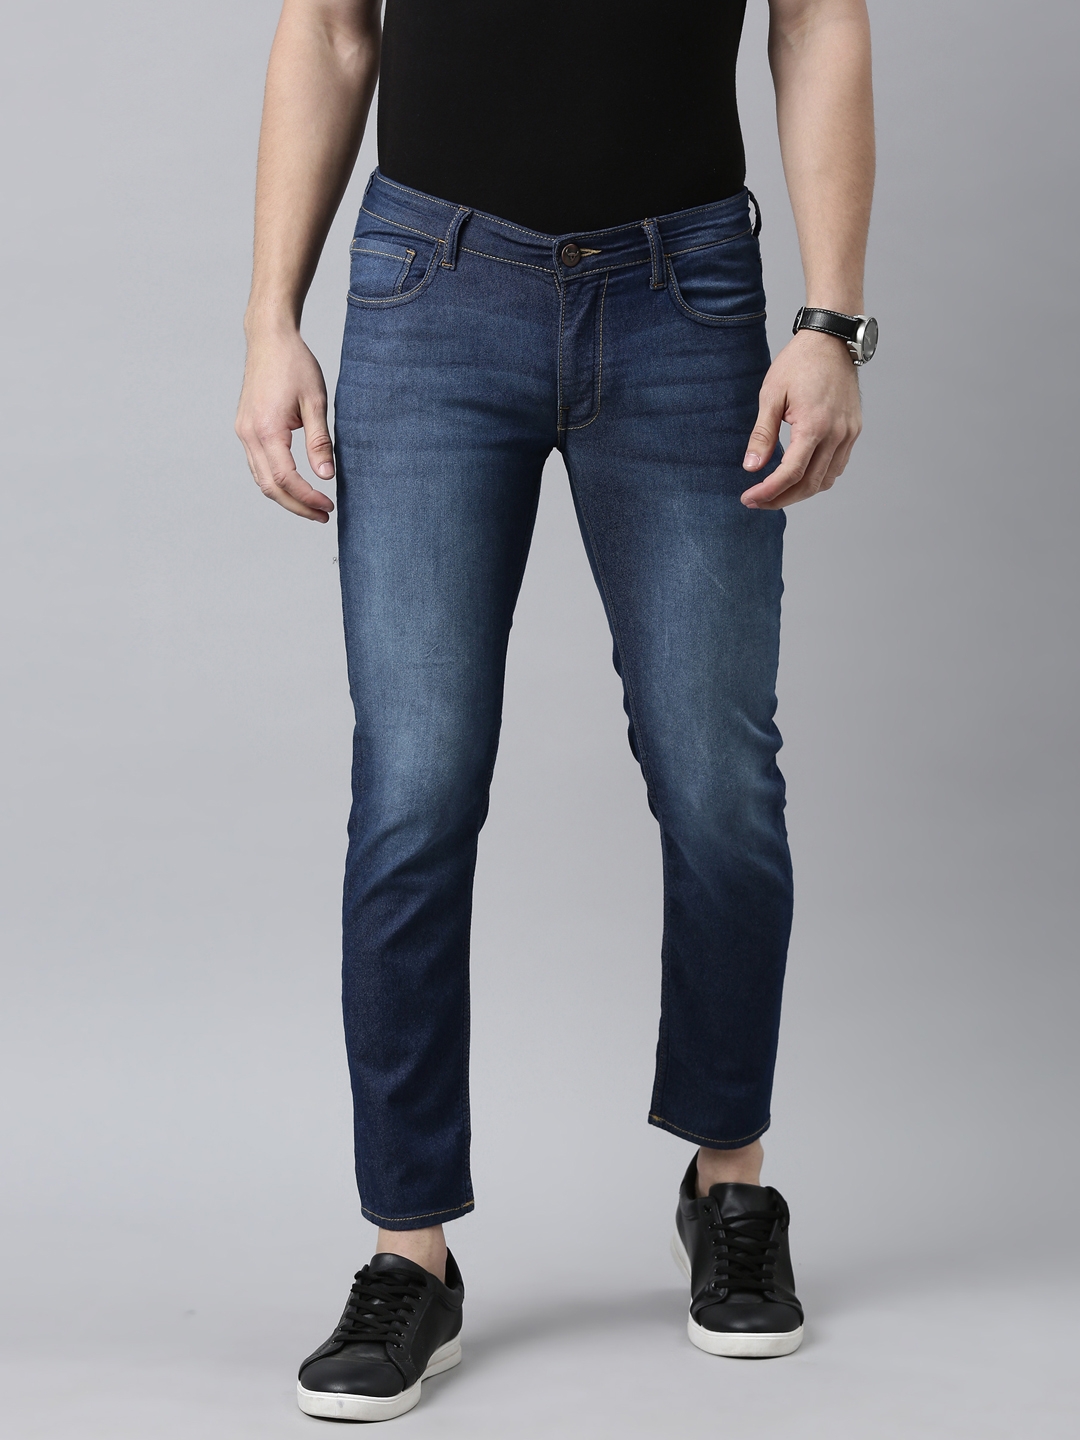 American Bull | American Bull Mens Solid Ankle Length Denim Jeans